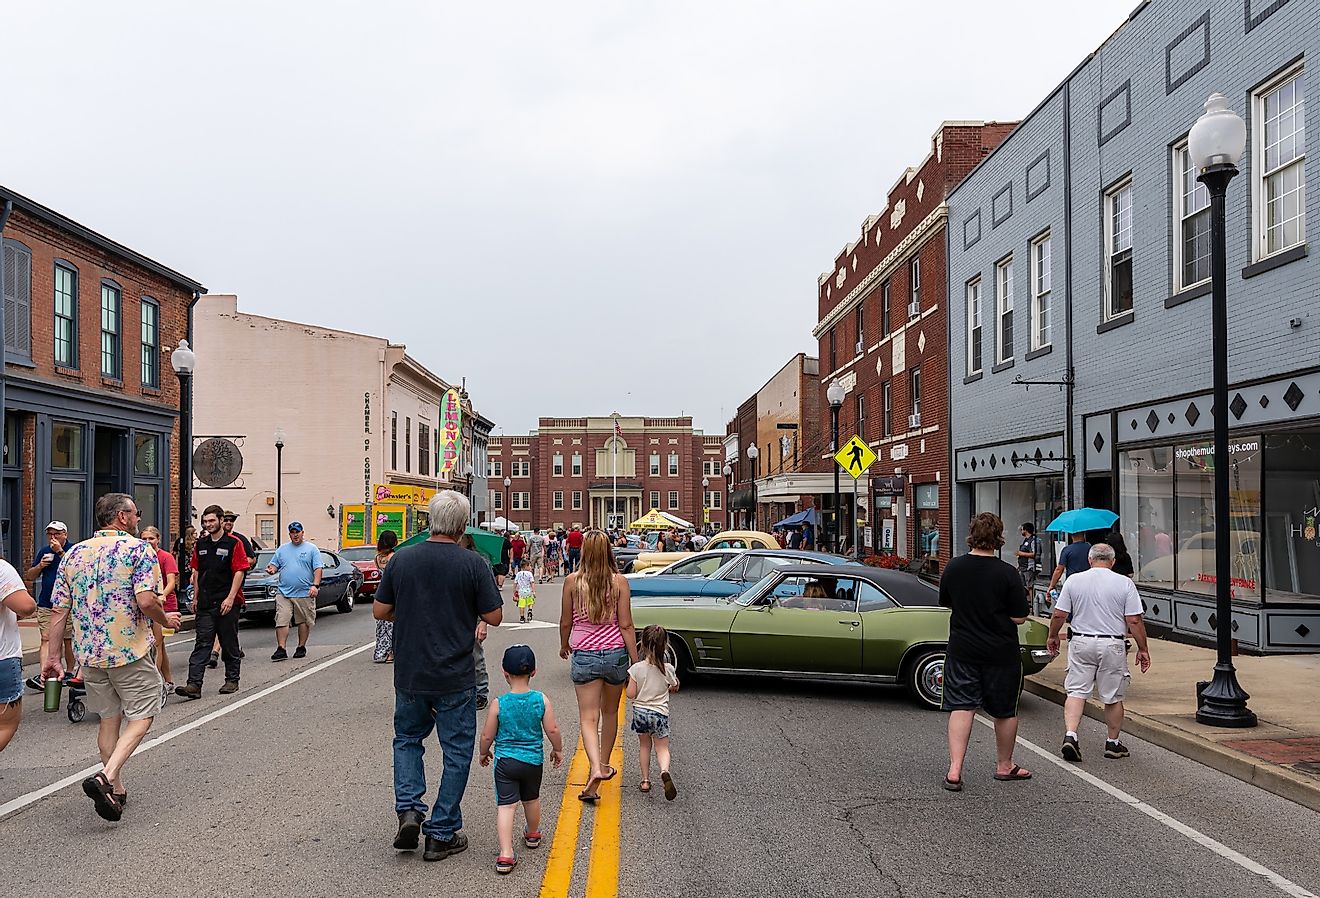 Cruisin' The Heartland car show in downtown Elizabethtown, Kentucky. Image credit Brian Koellish via Shutterstock